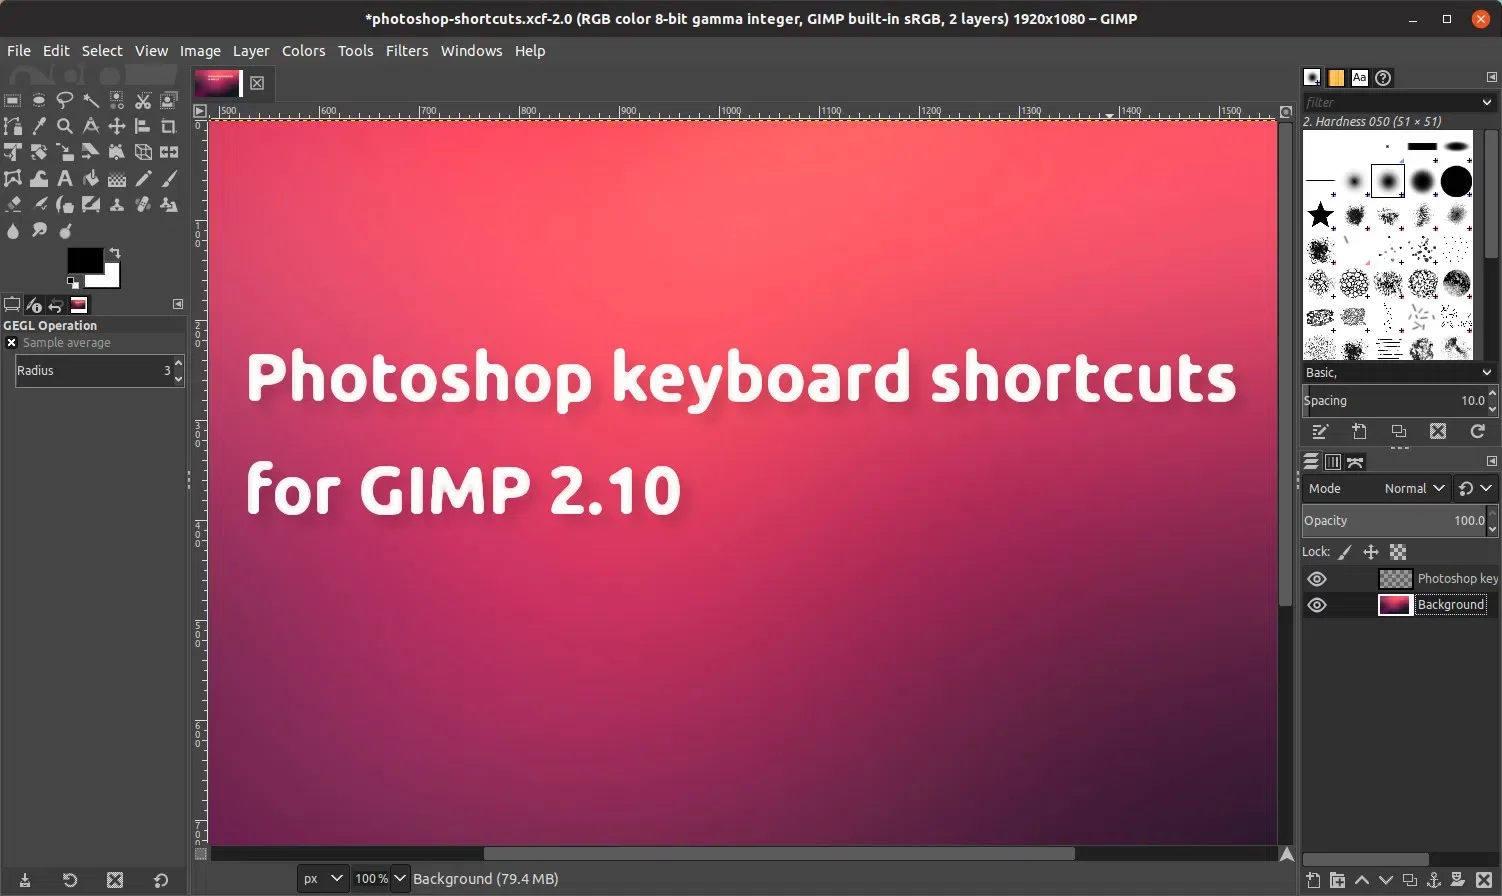 GIMP Image editor Photoshop shortcuts